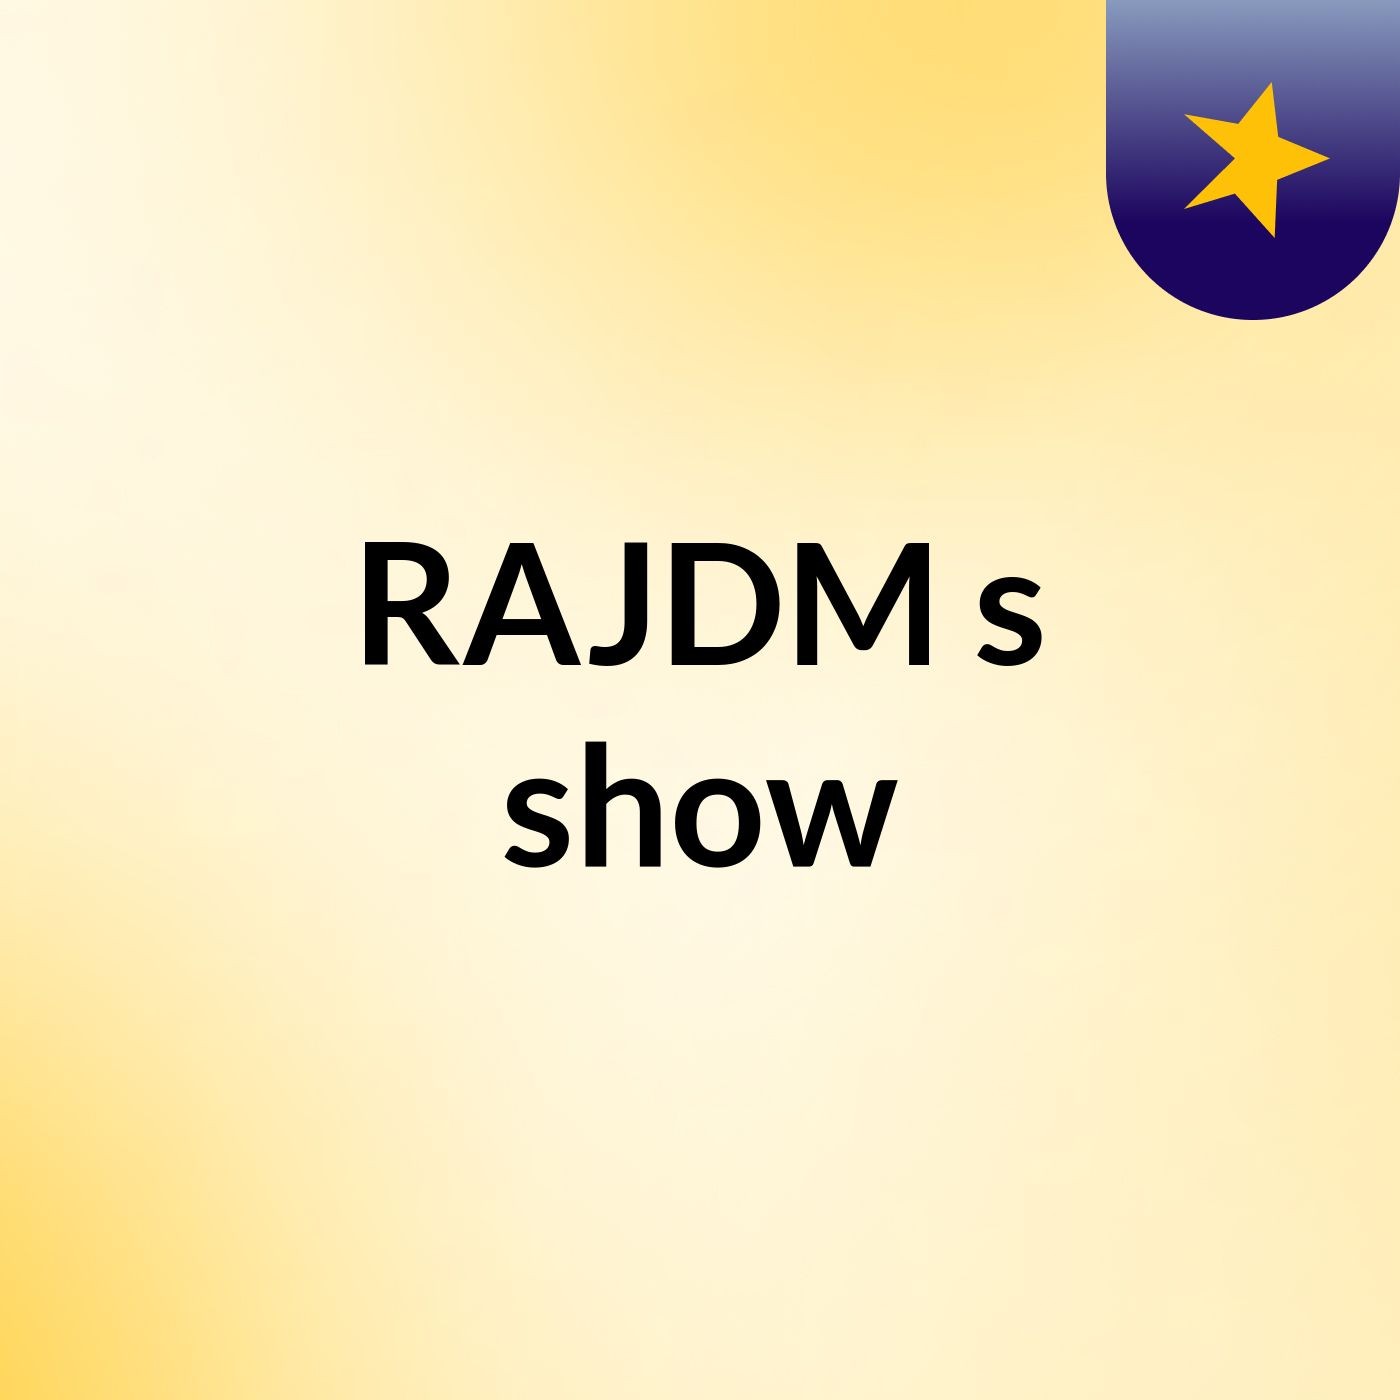 RAJDM's show